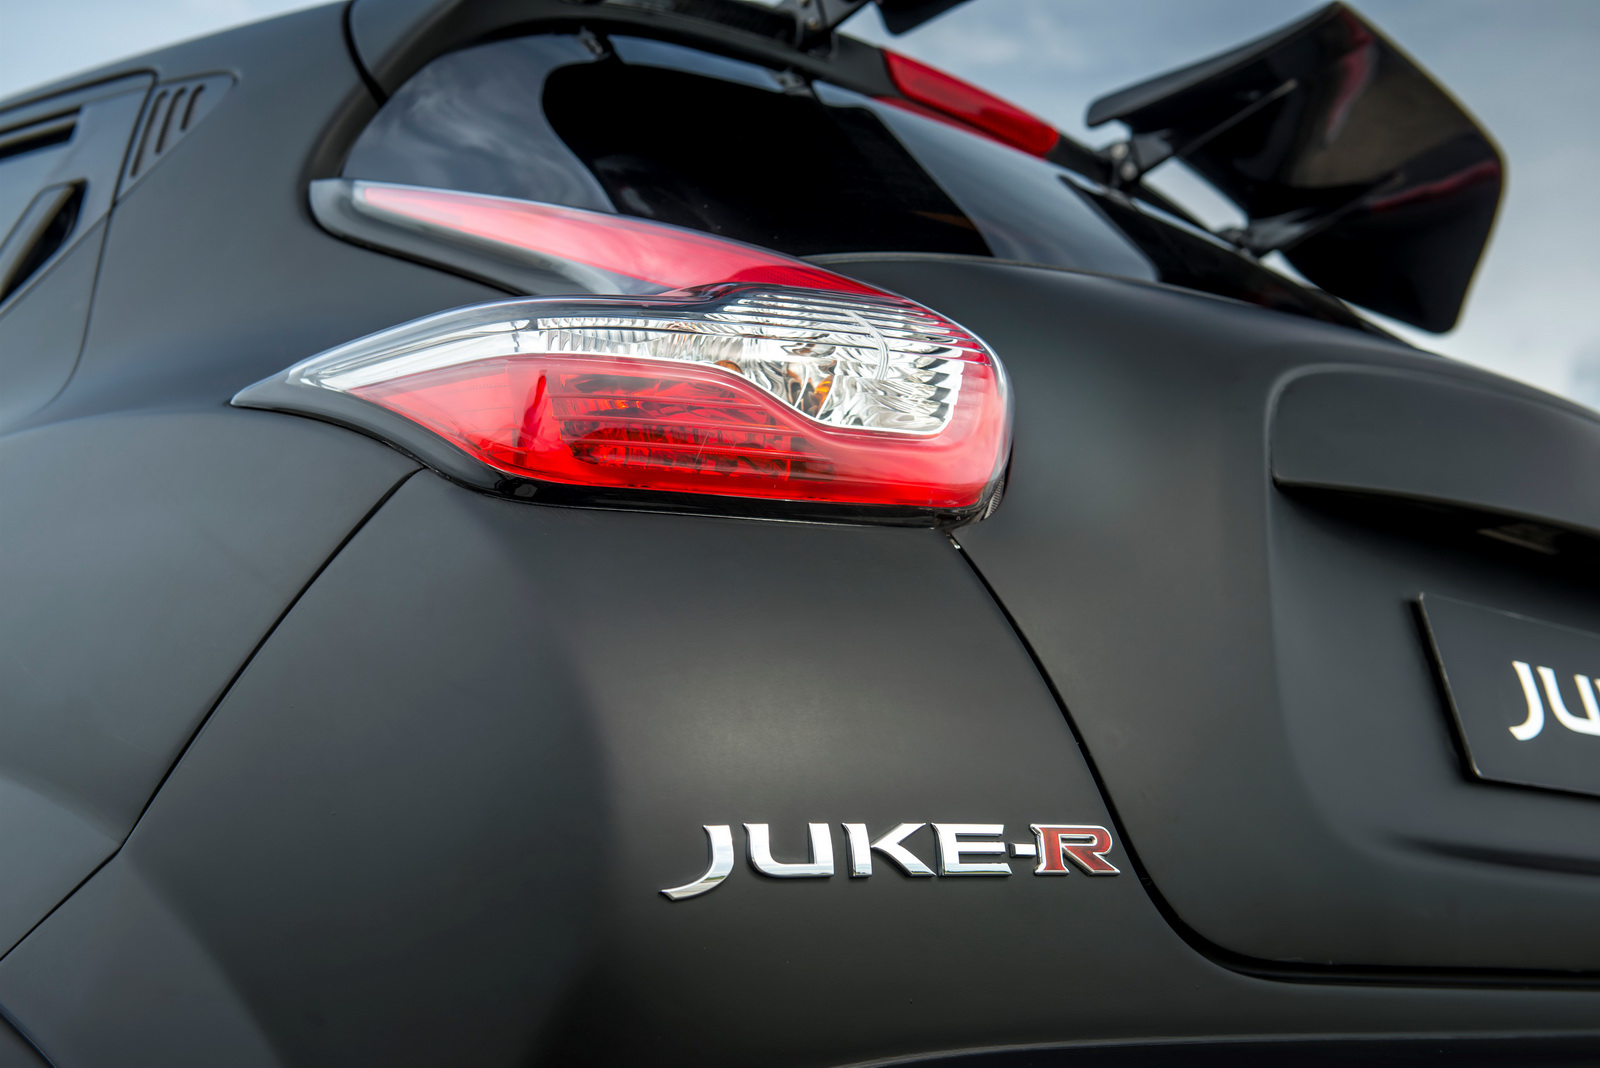 Nissan reawakens the sleeper with 600-hp Juke-R 2.0 super-CUV